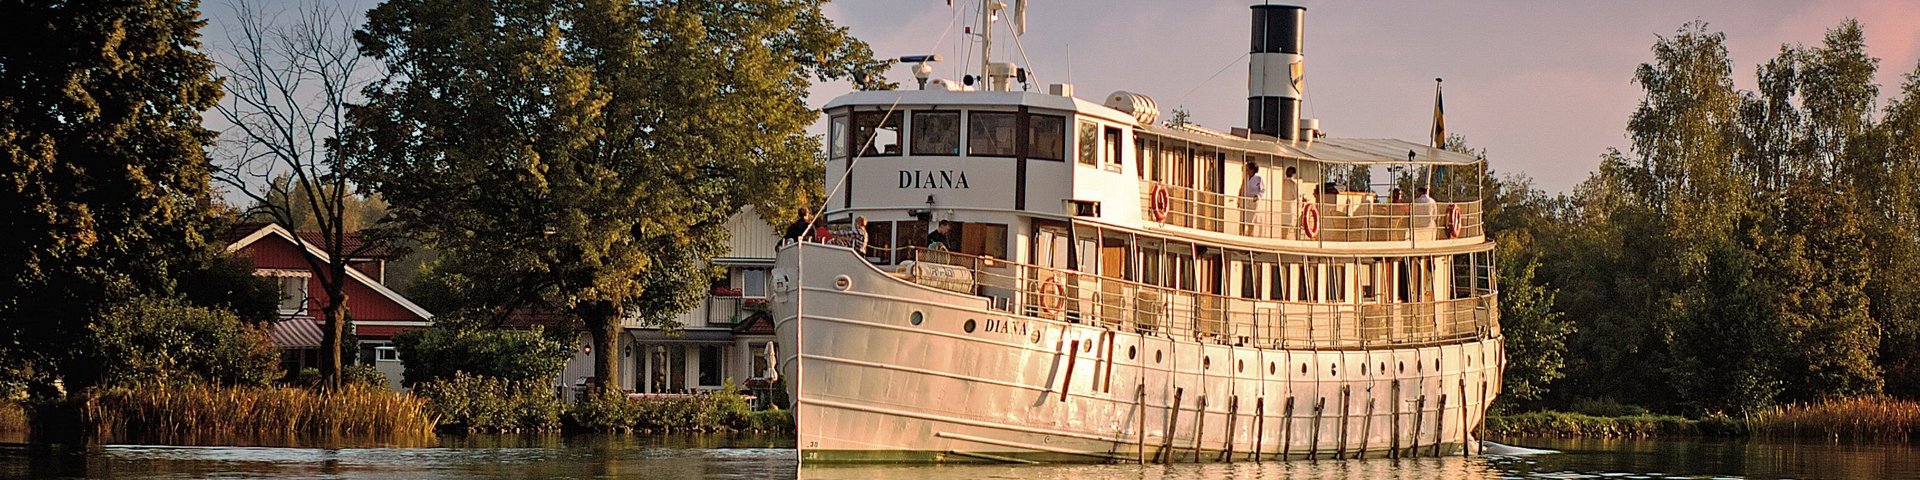 MS Diana auf dem Göta Kanal